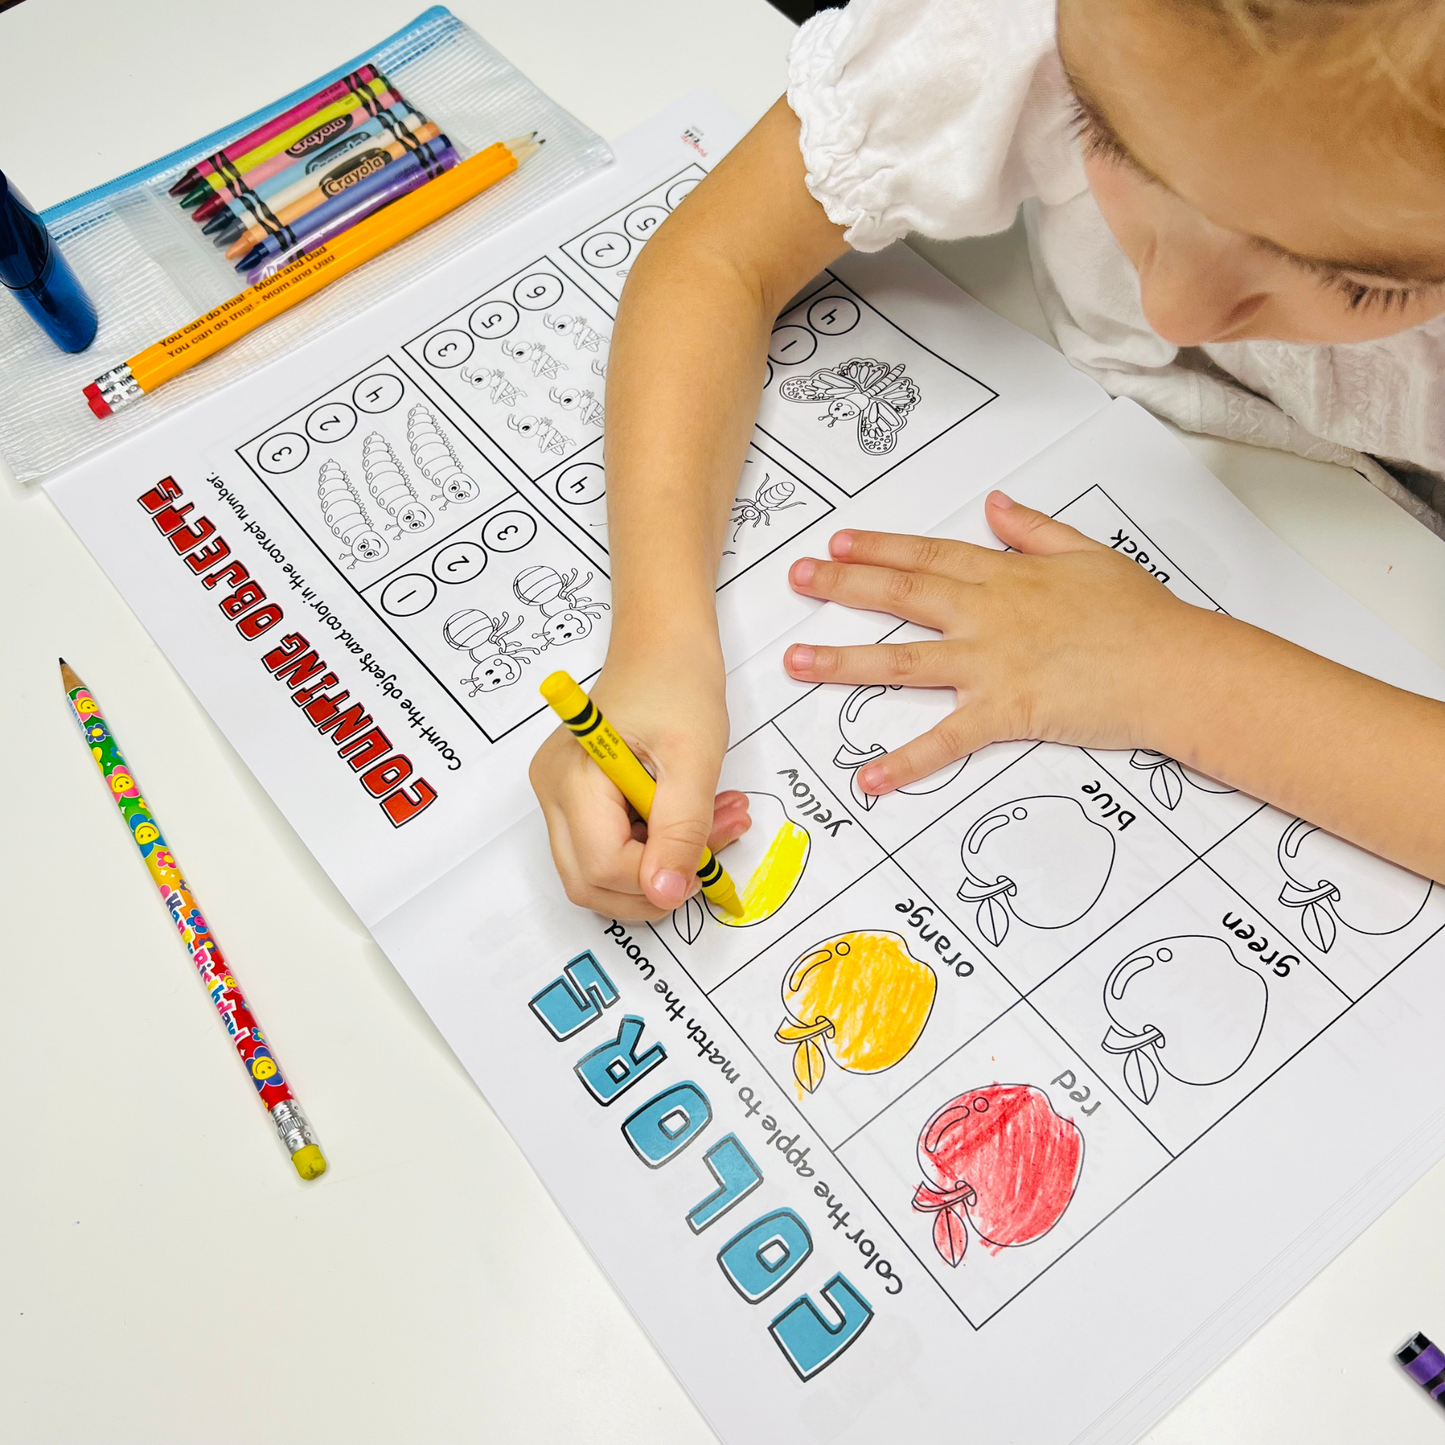 WORKBOOK BUNDLE | Preschool Back to School Tracing Name and Alphabet Fun